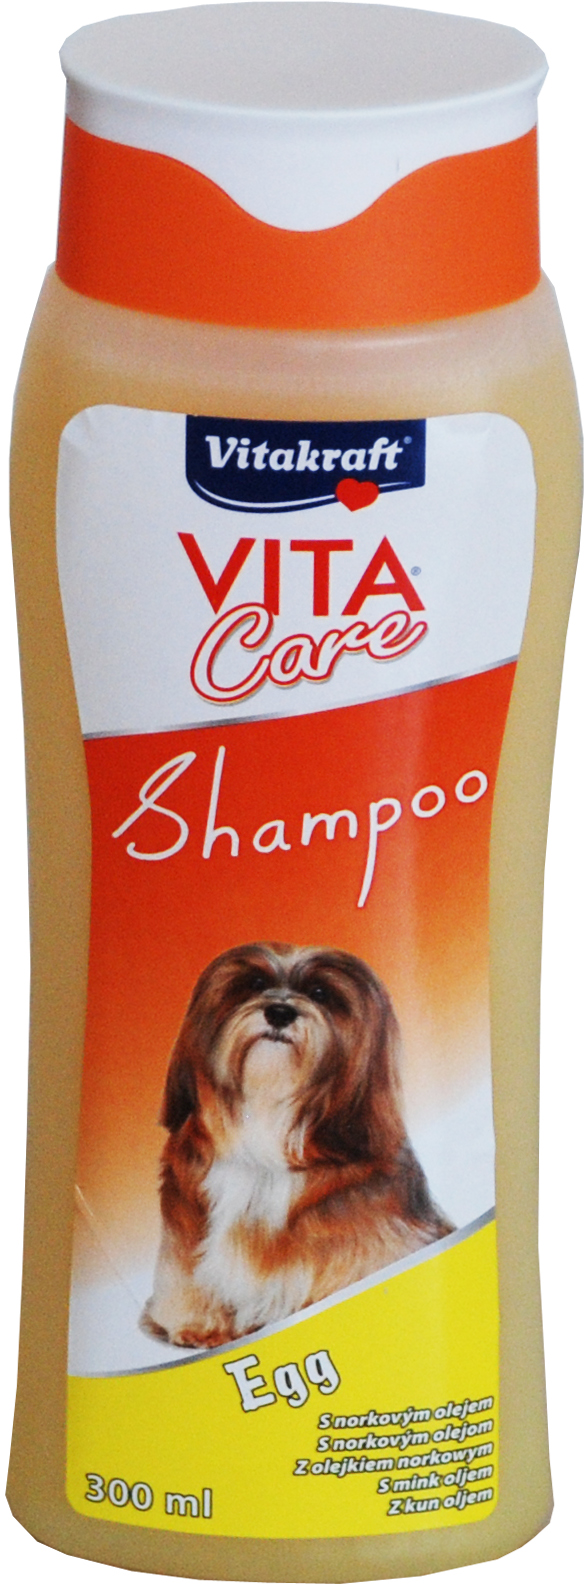 dobry i tani szampon dla psa